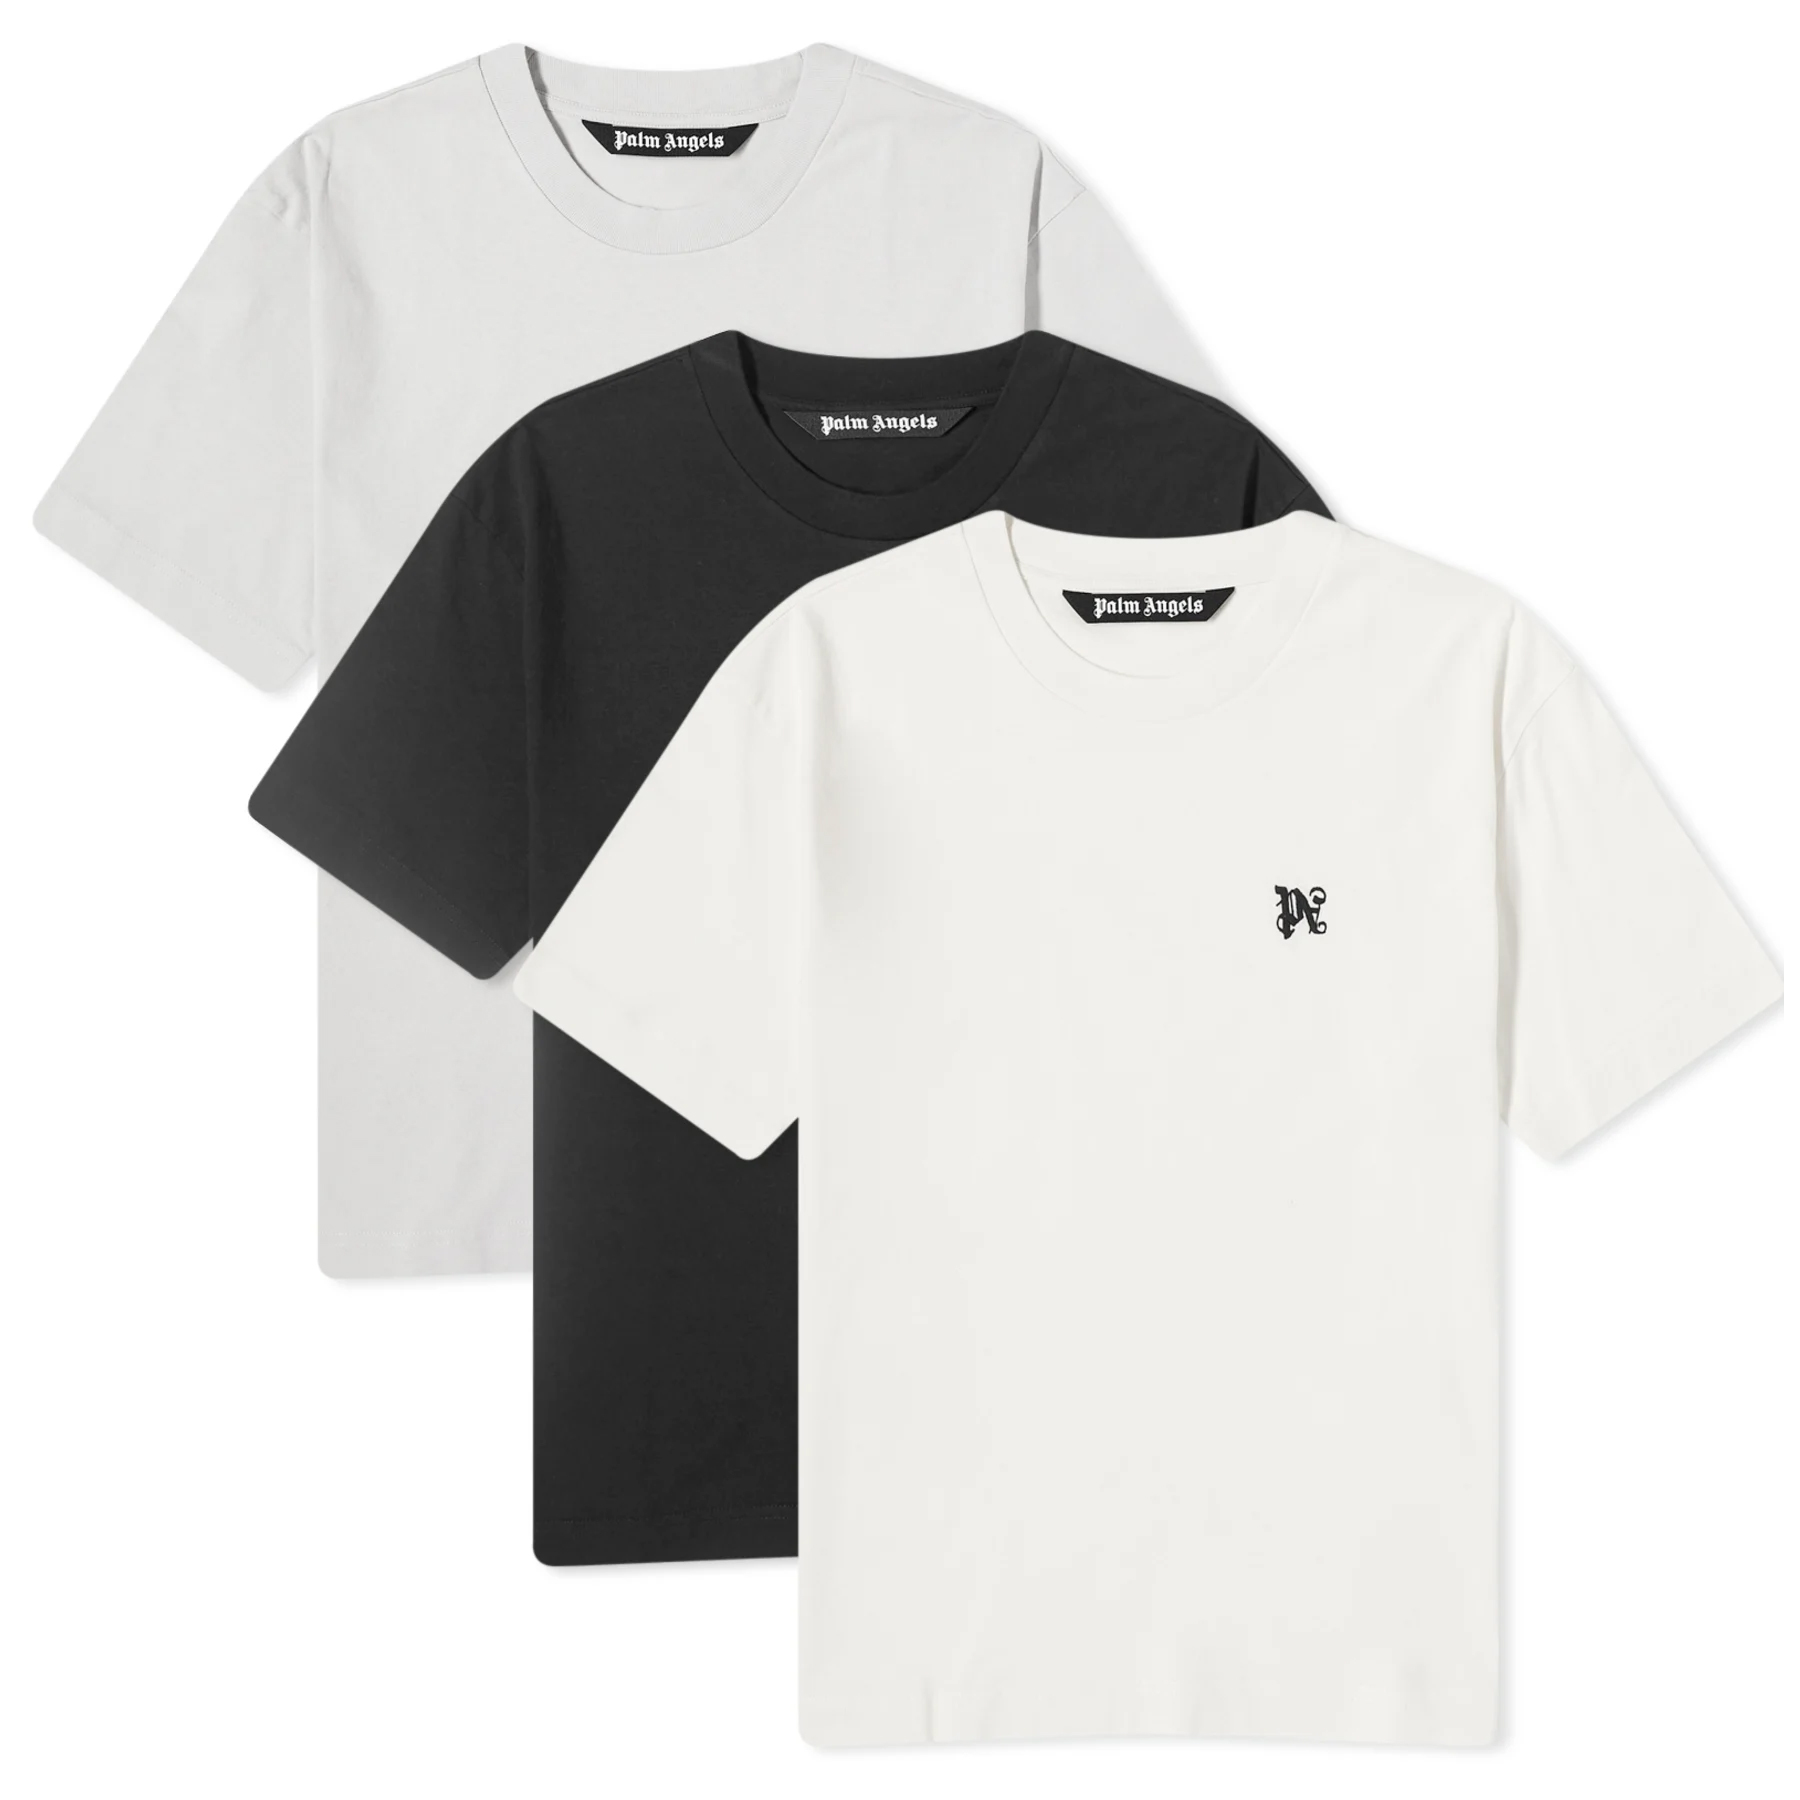 Набор футболок Palm Angels Mini Logo Multi Pack Tees, 3 штуки шорты palm angels logo swimshorts черный